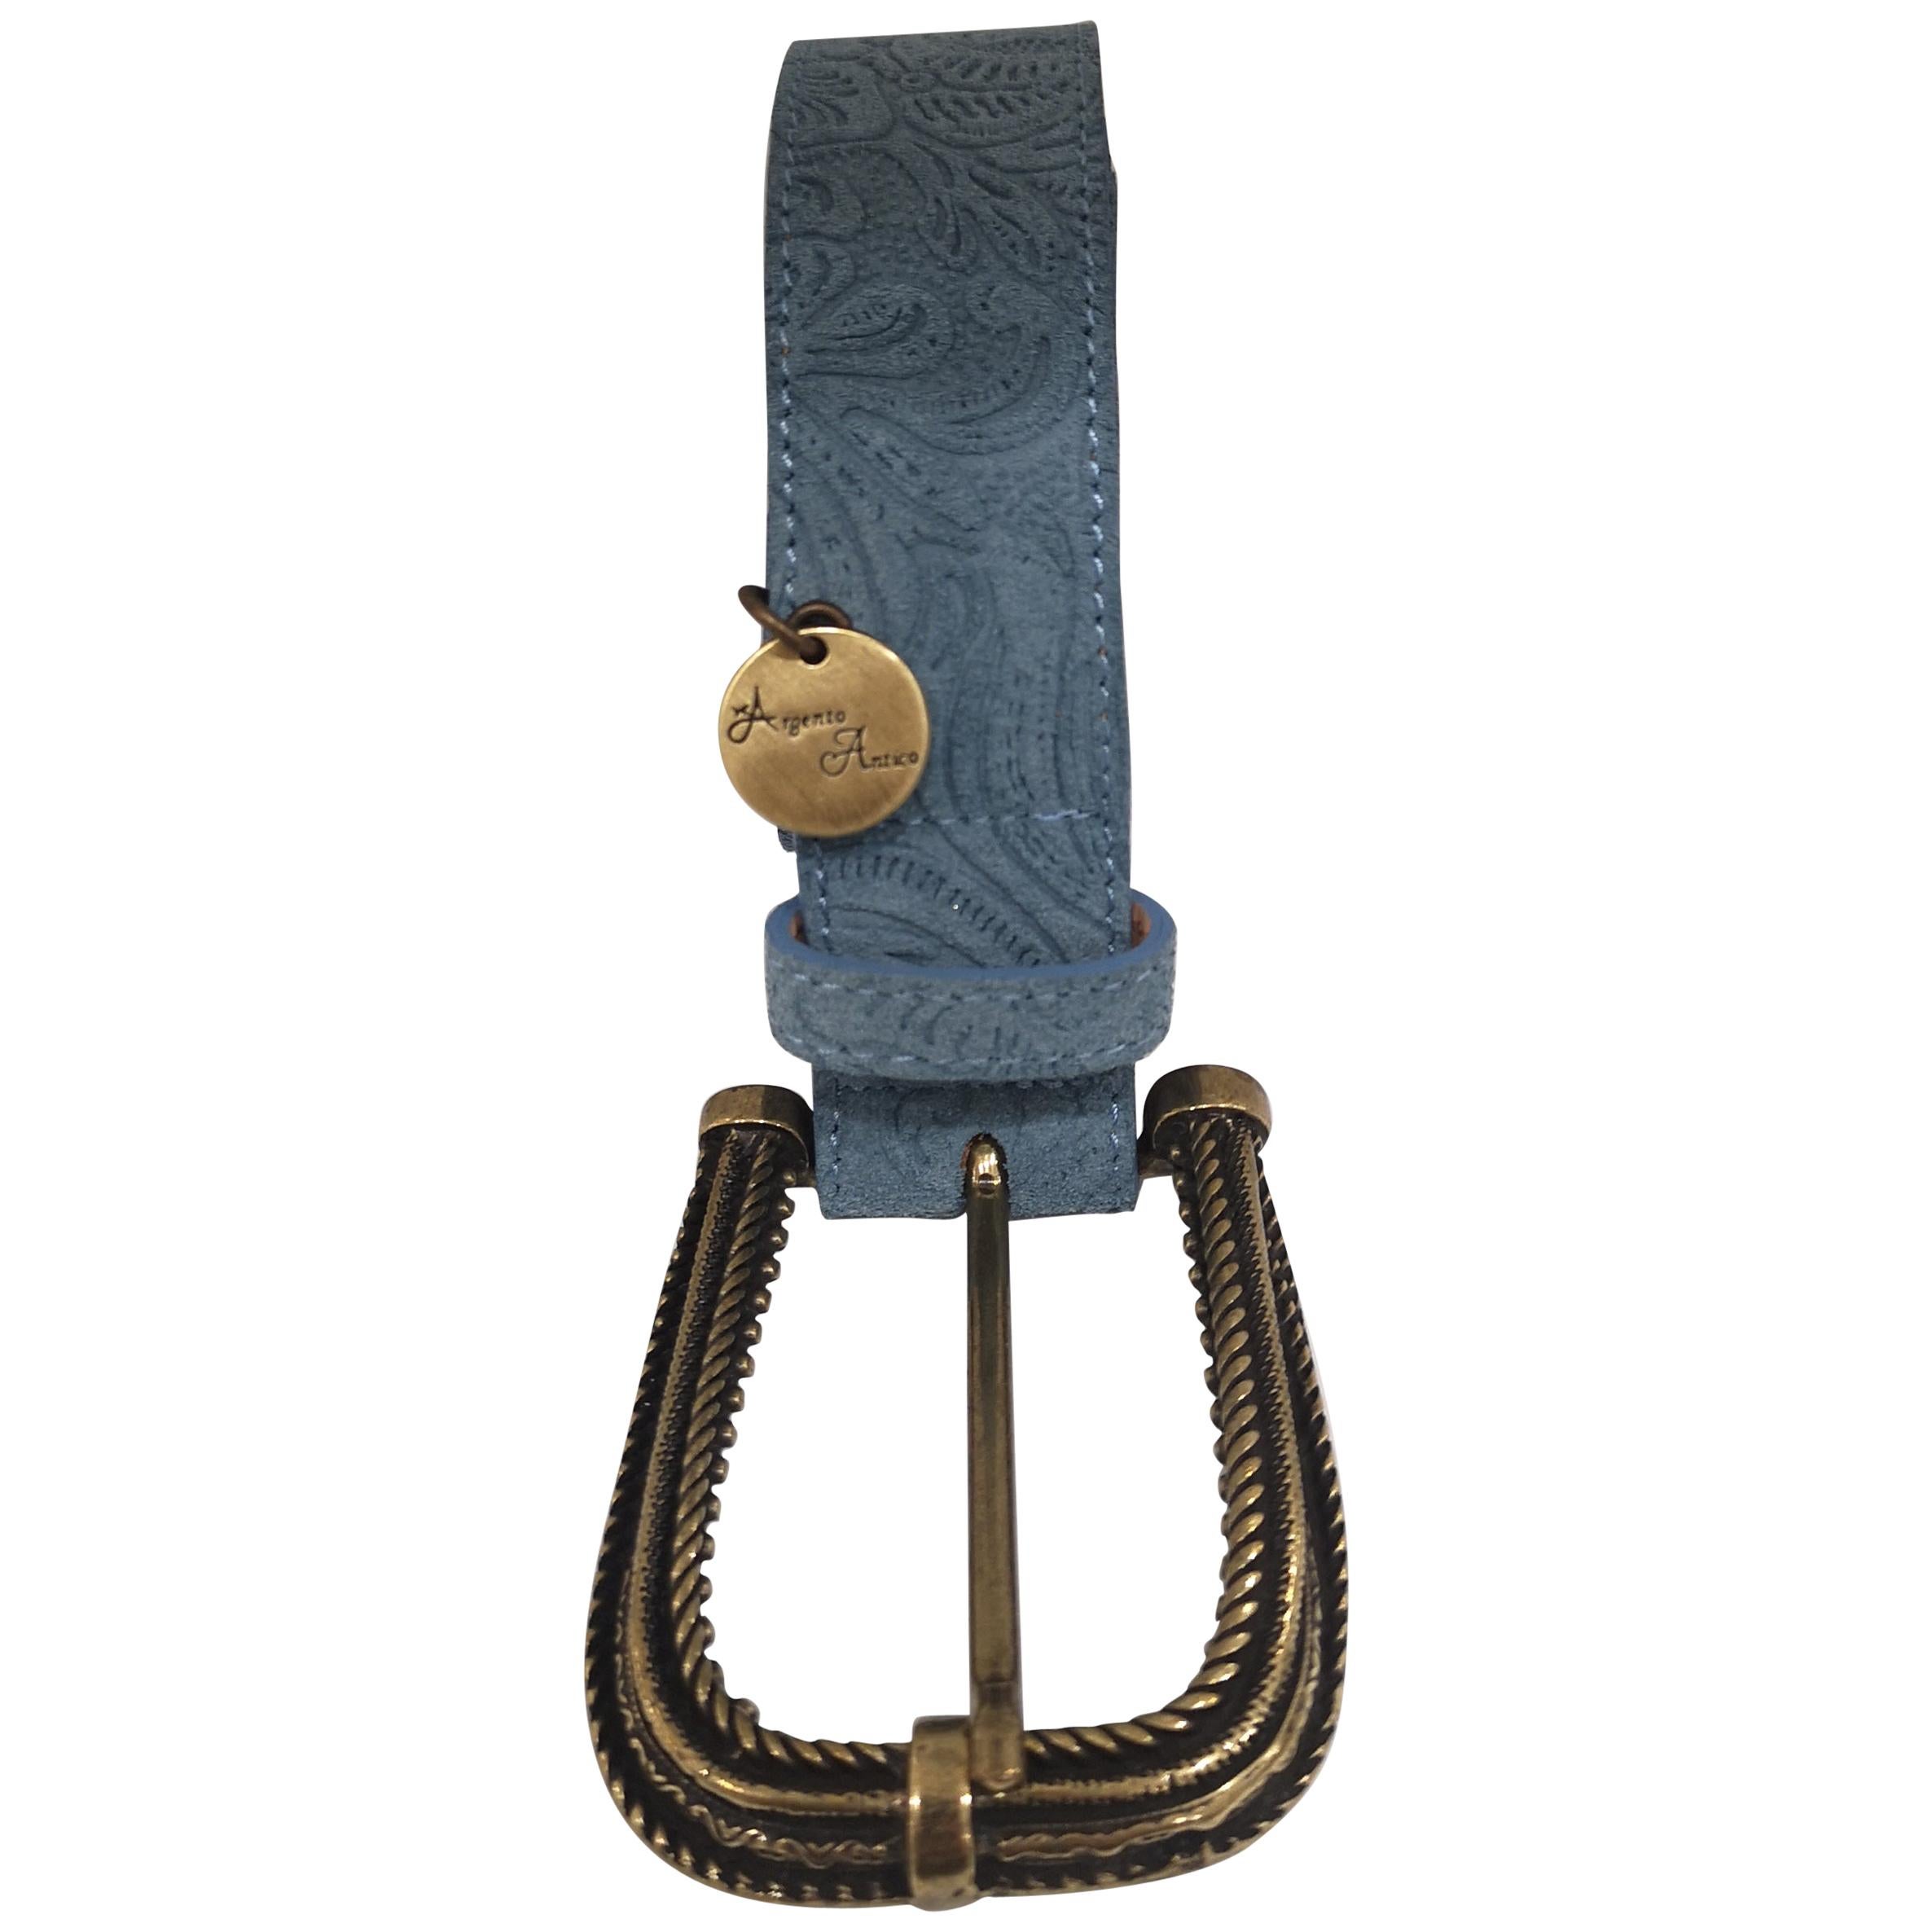 Blue suede leather belt